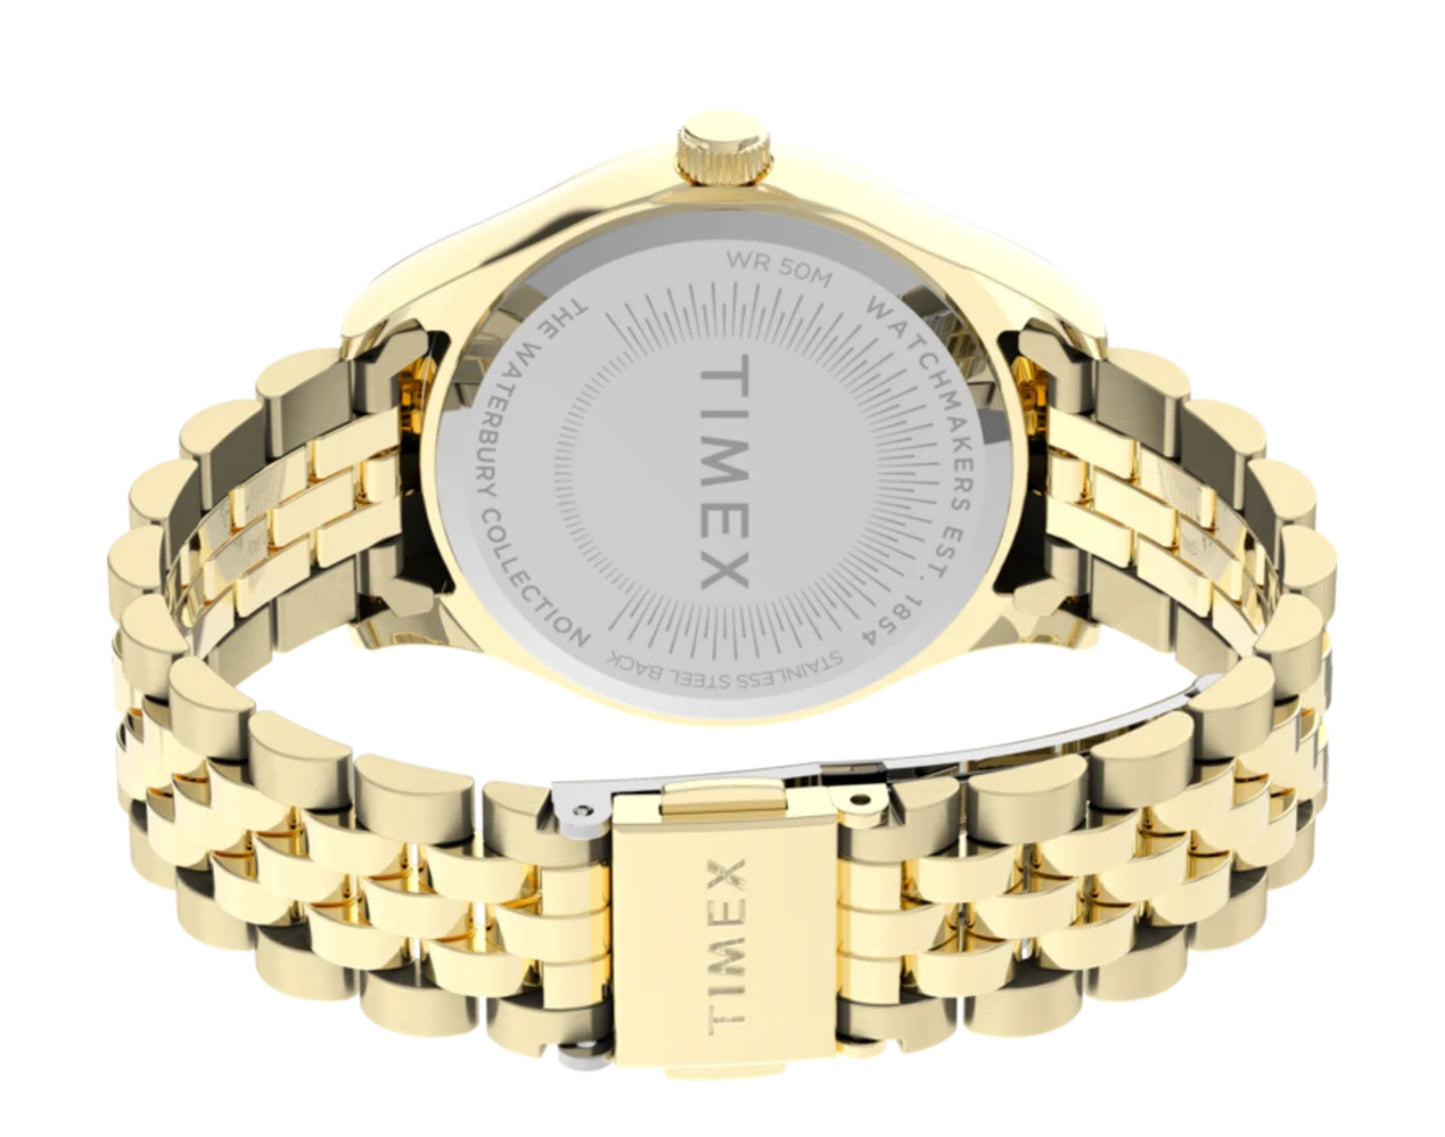 Timex Waterbury Legacy 34mm Steel Bracelet Gold-Tone Women's Watch TW2T86900VQ